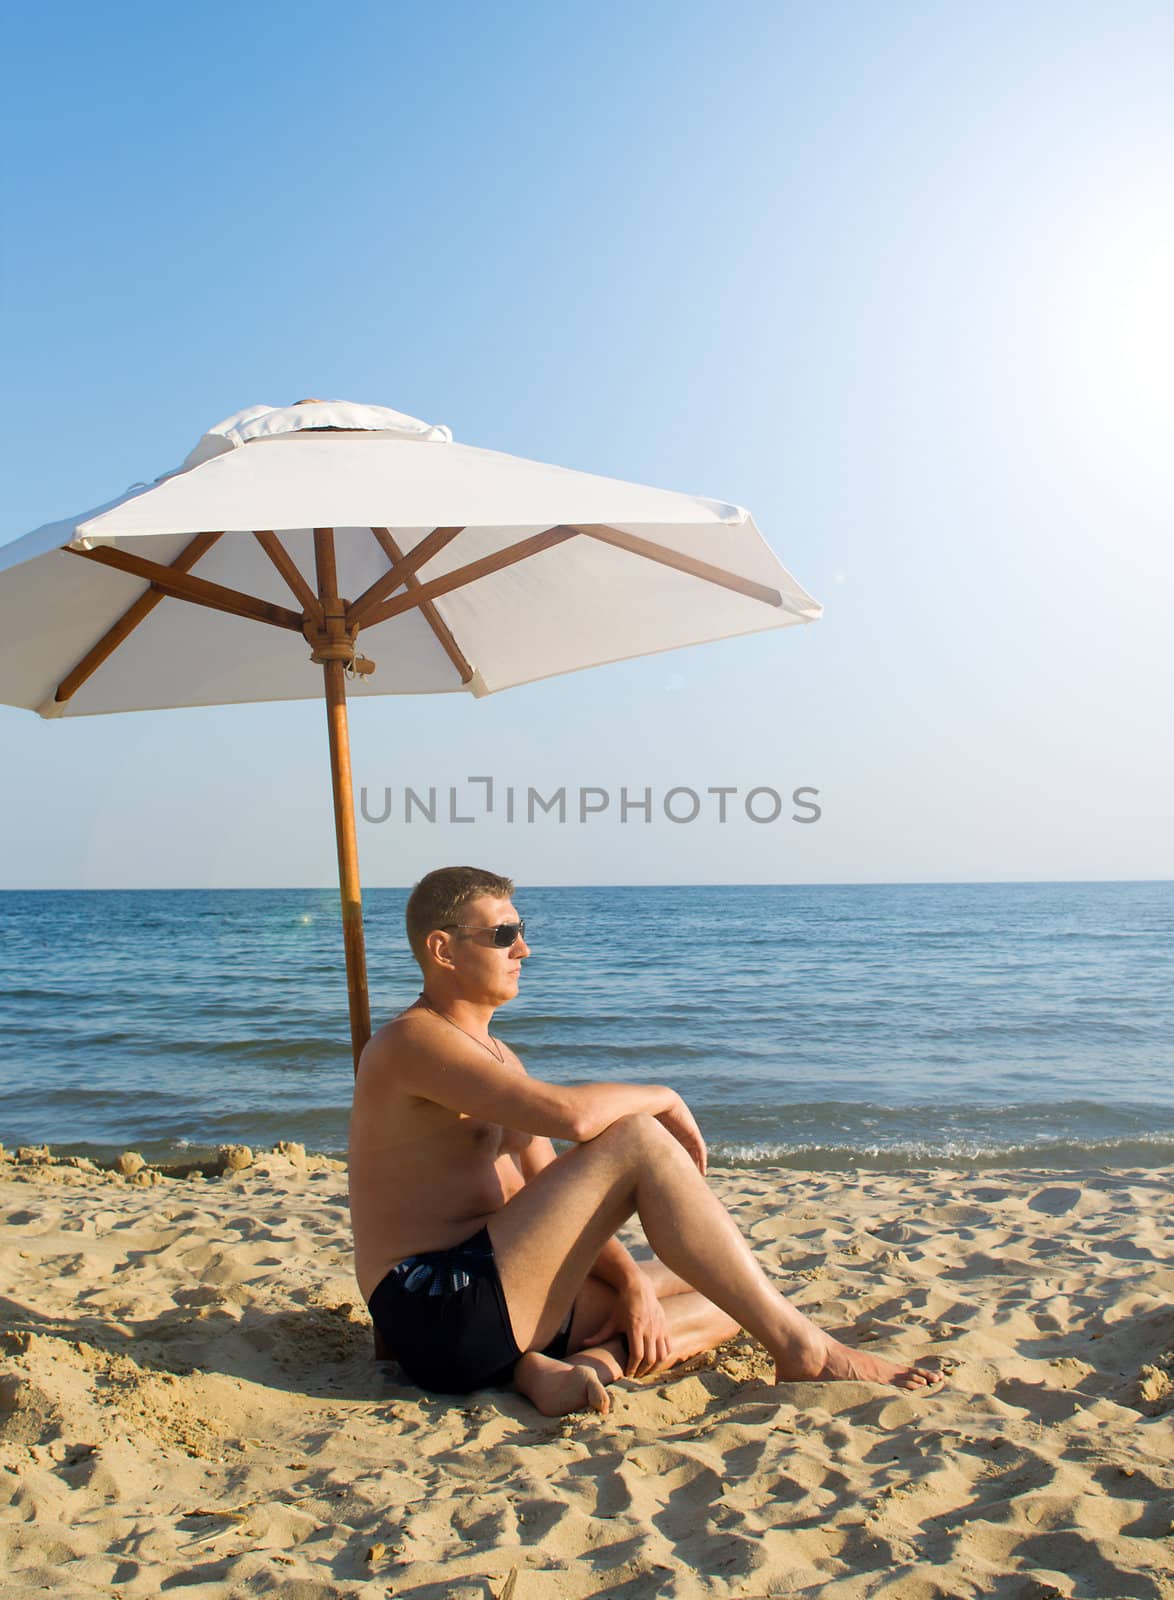 The man under a solar umbrella on a beach